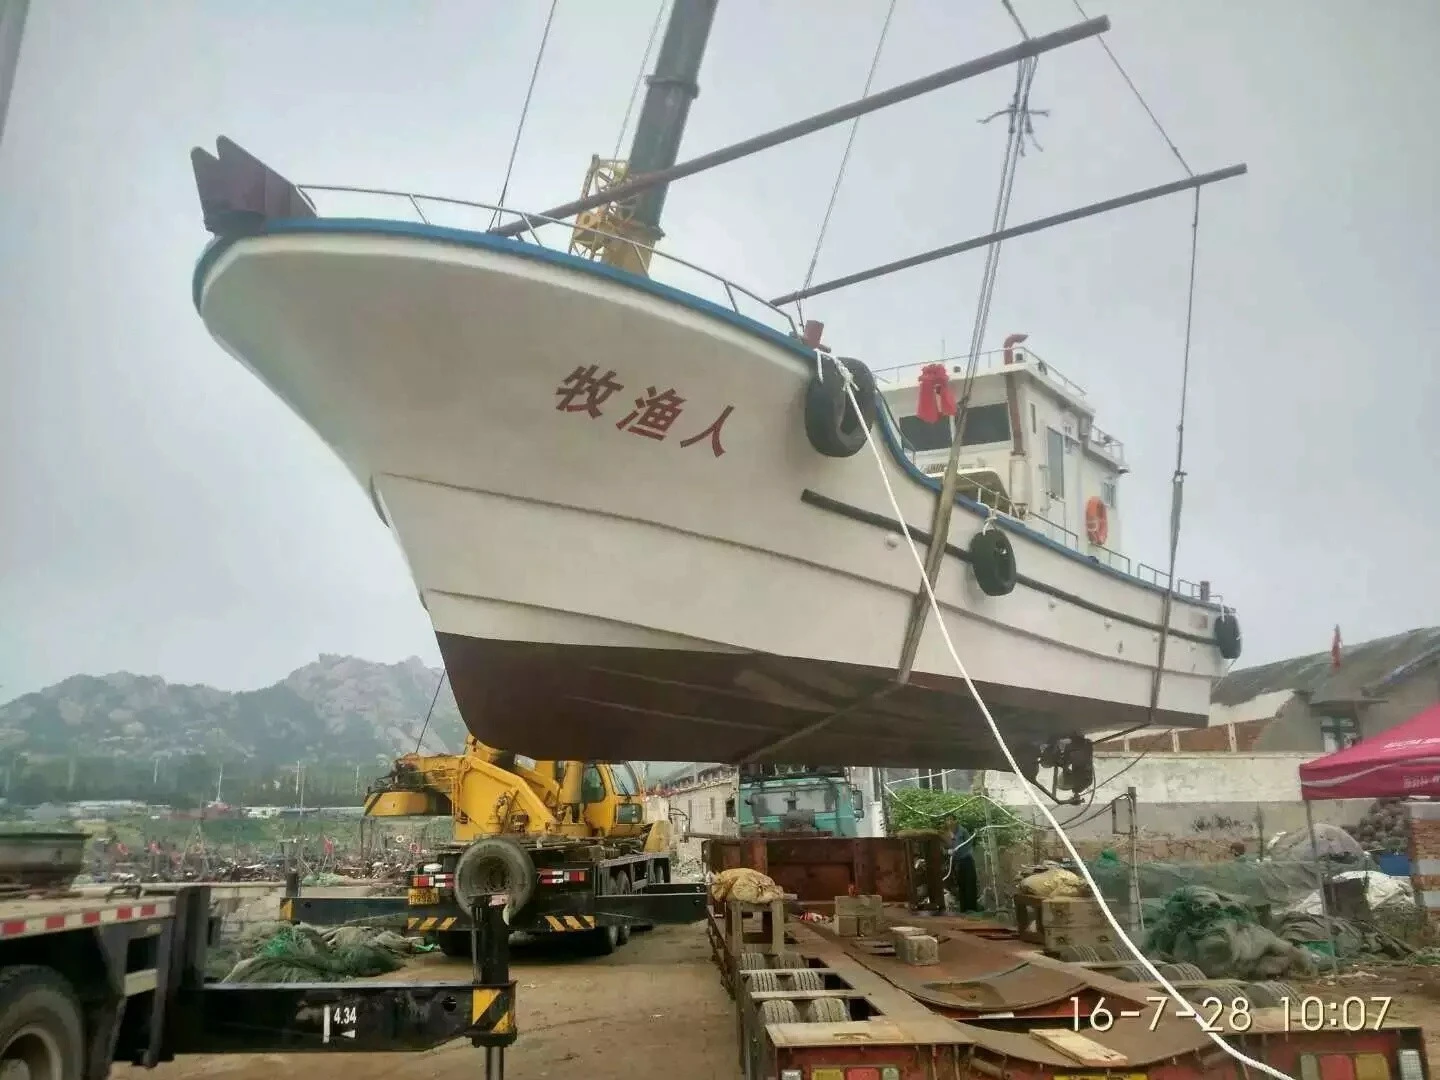 Grandsea 21.3m Fiberglass Commercial longline Fishing Vessel for sale